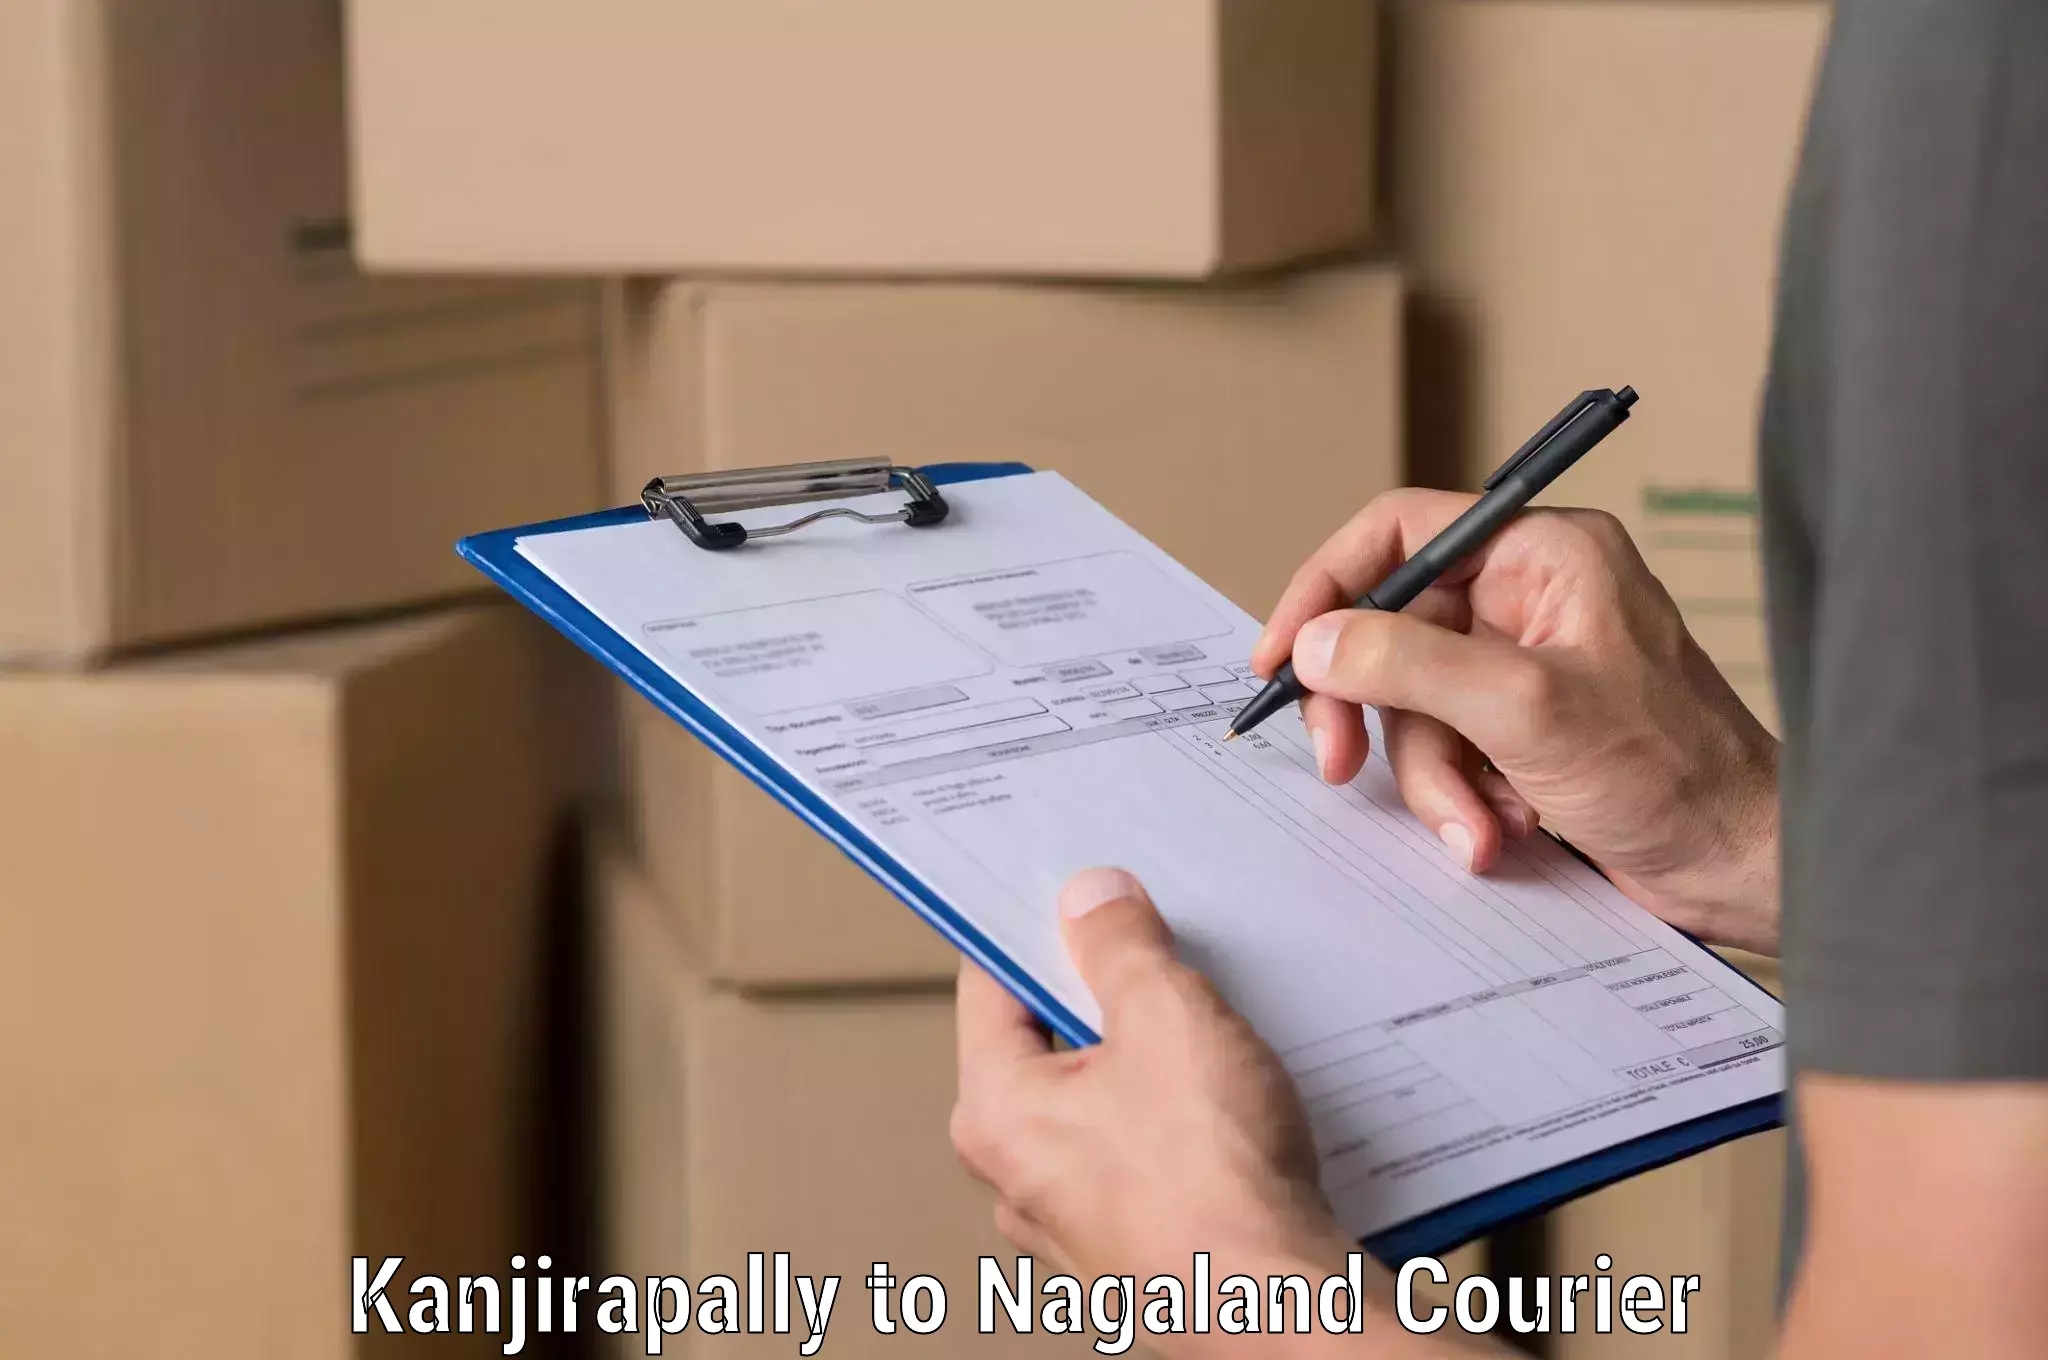 Digital courier platforms Kanjirapally to Nagaland